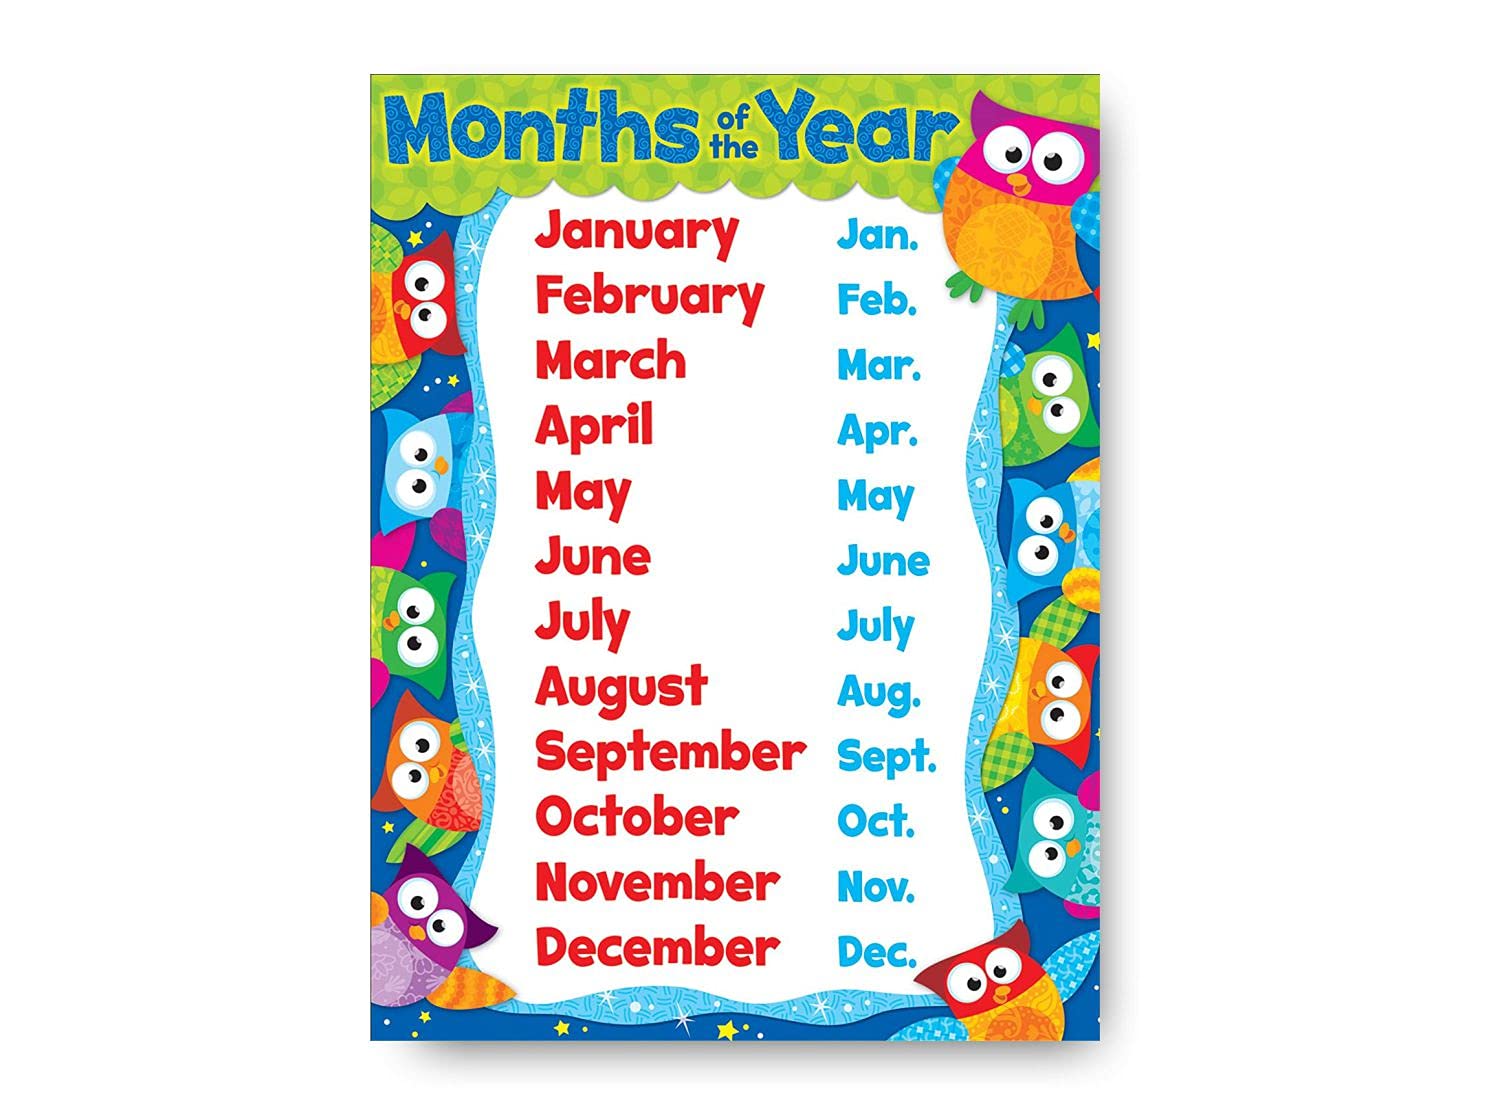 Monthly calendar poster, great for kindergarten learning activities.